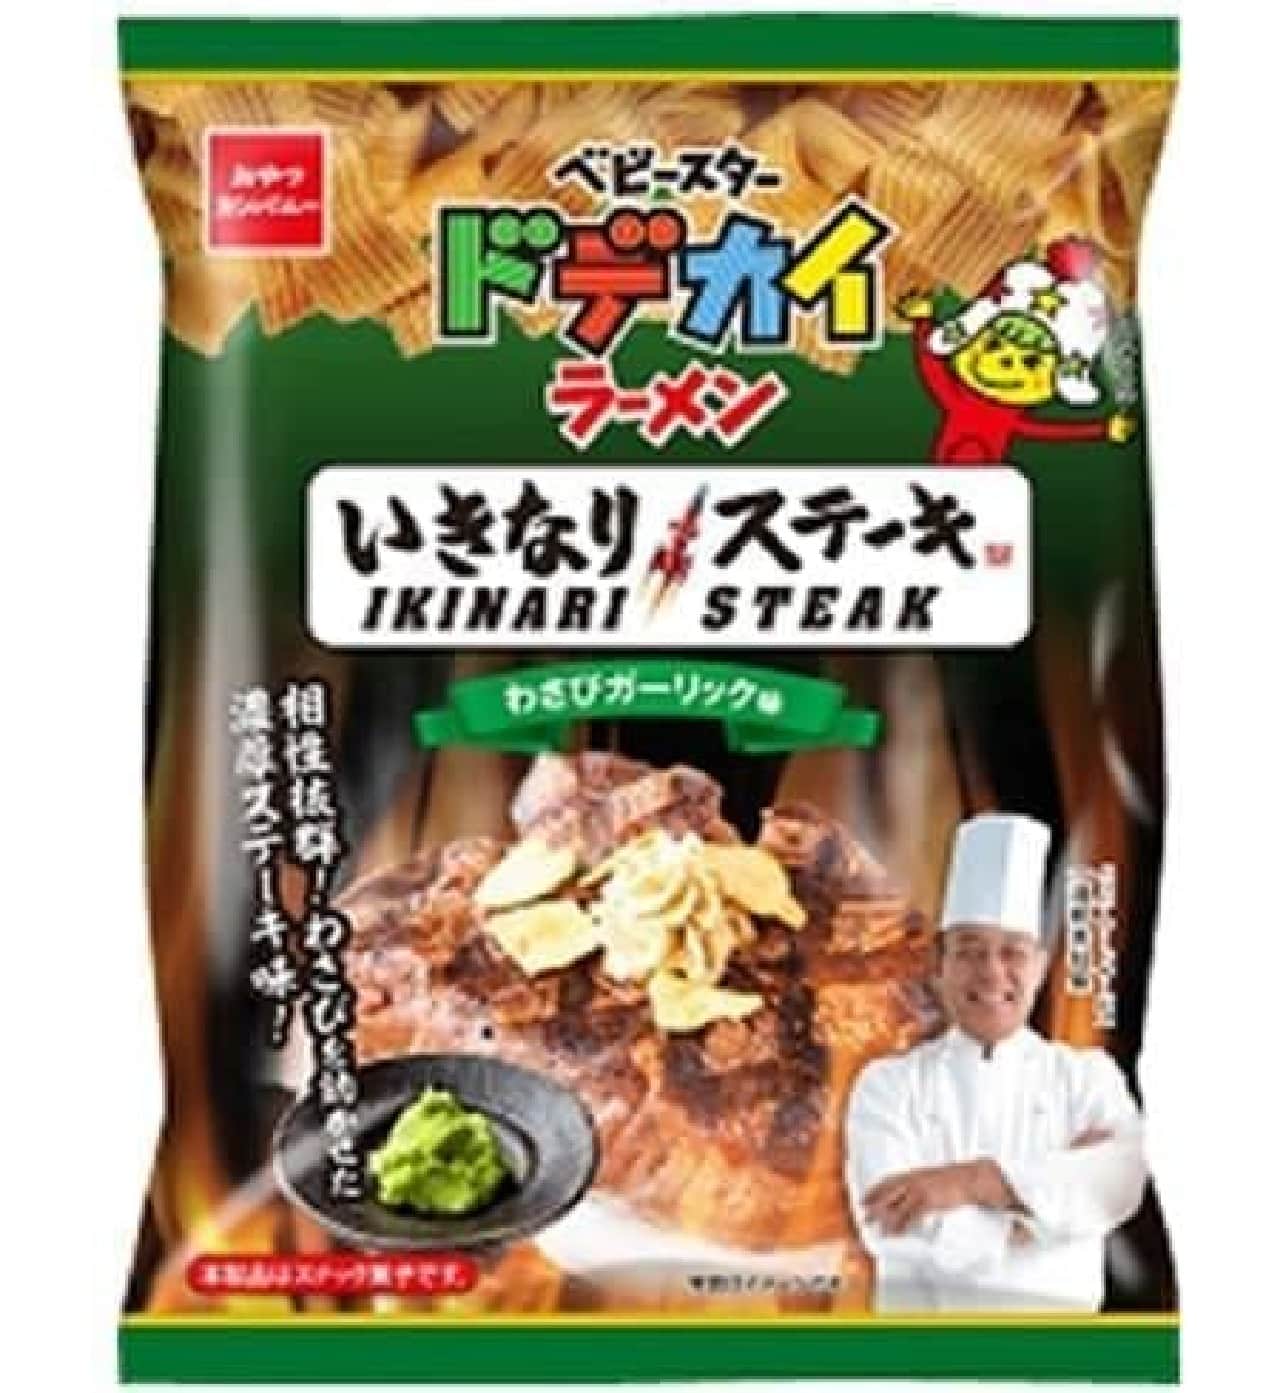 Baby Stard Dekai Ramen (wasabi garlic flavor) is a snack confectionery inspired by the popular way of eating "wasabi & garlic".